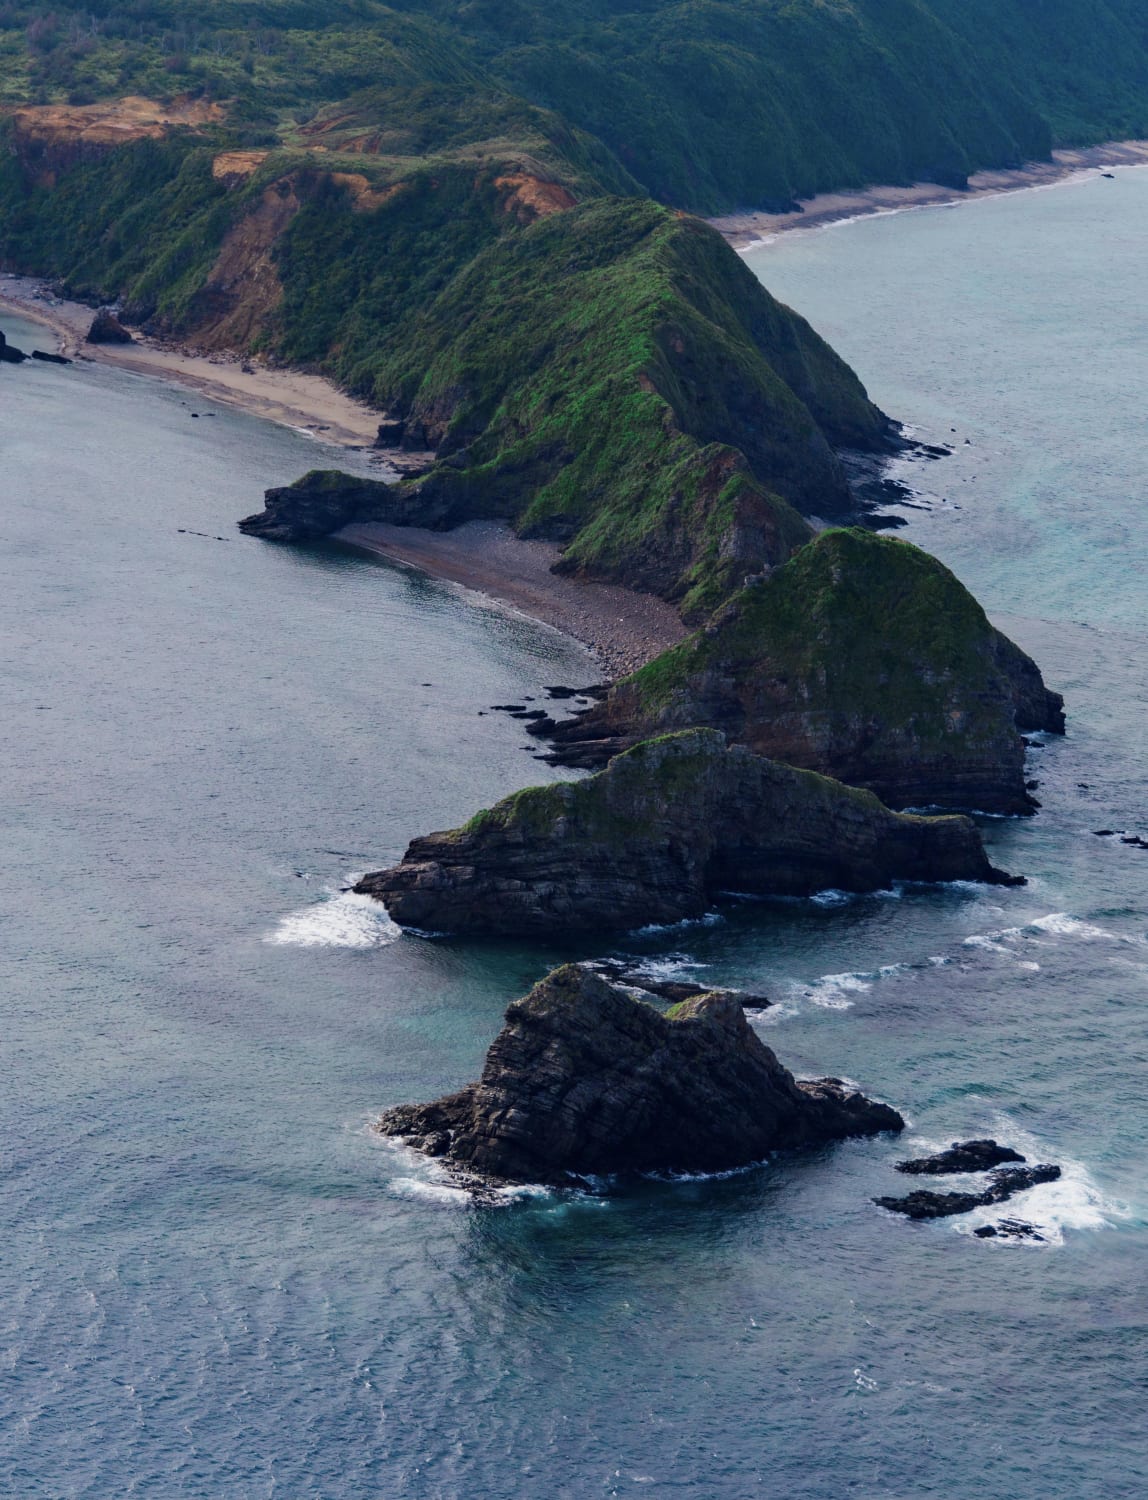 The peak of the island of Okinawa Japan IG: eddie.visuals